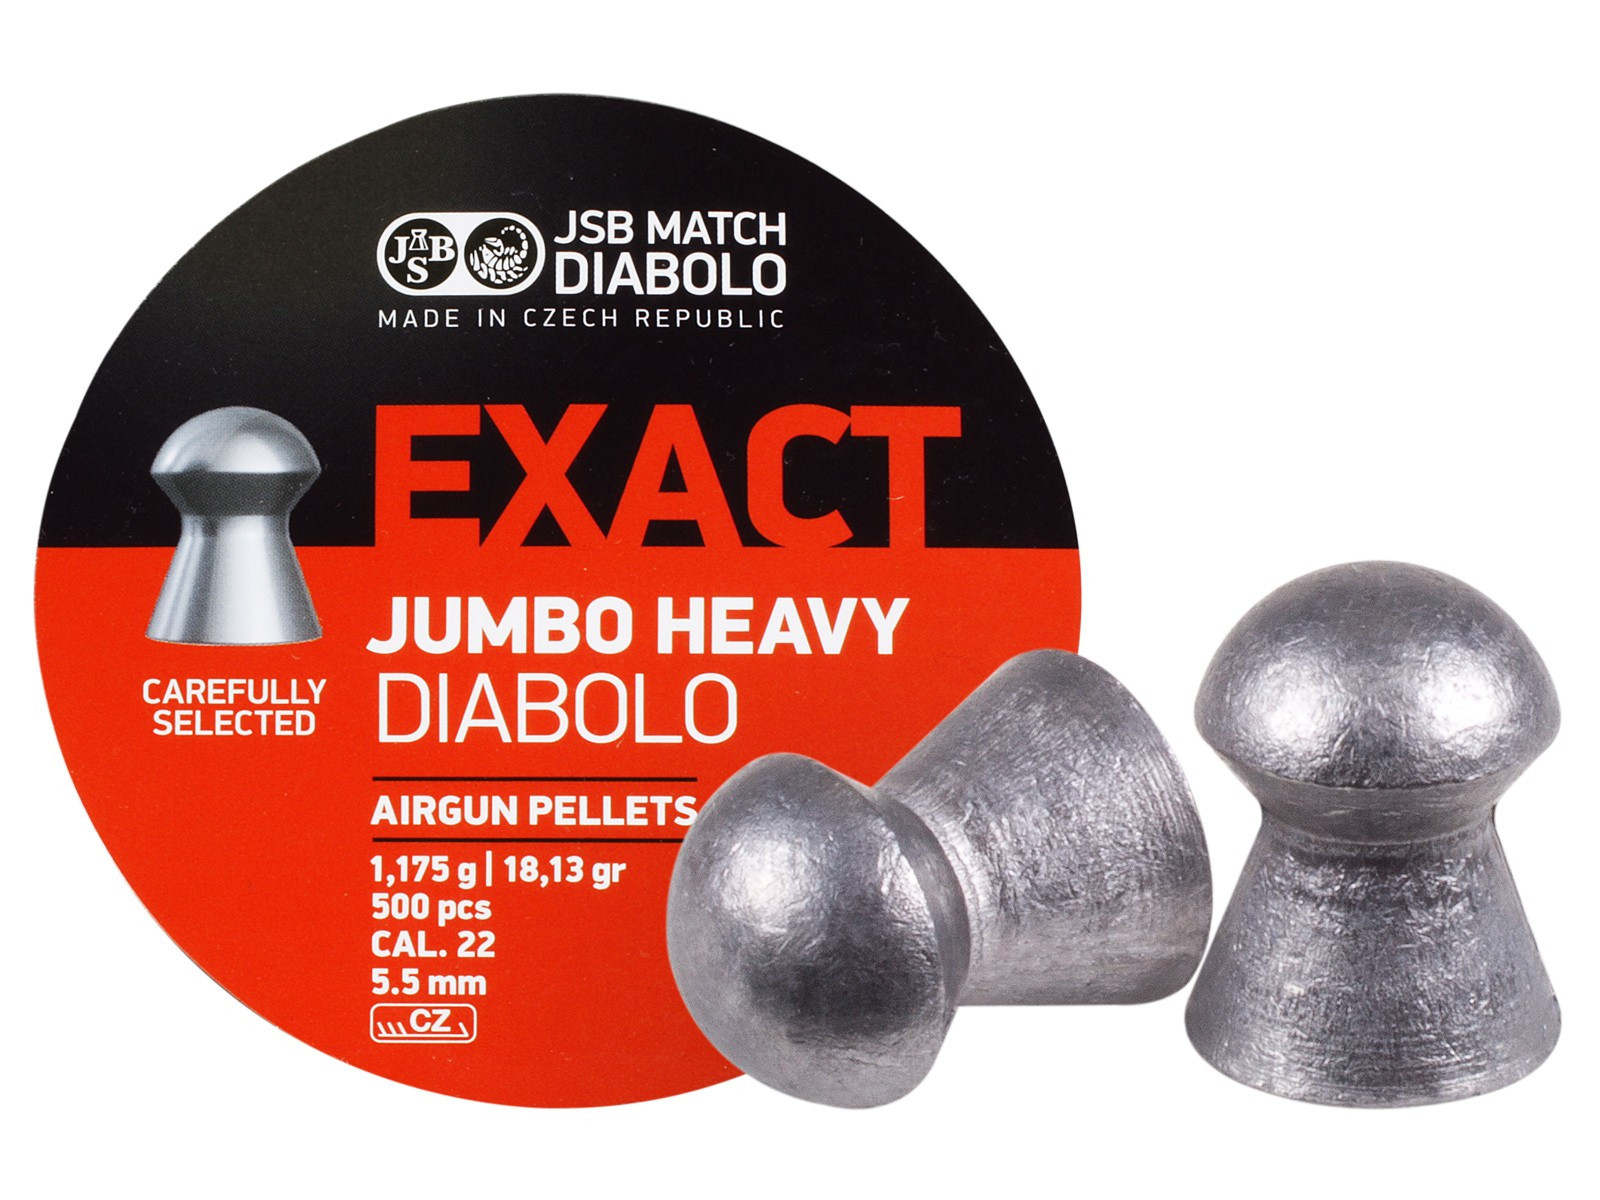 JSB Diabolo Exact Jumbo Heavy .22 Cal, 18.13 gr - 500 ct